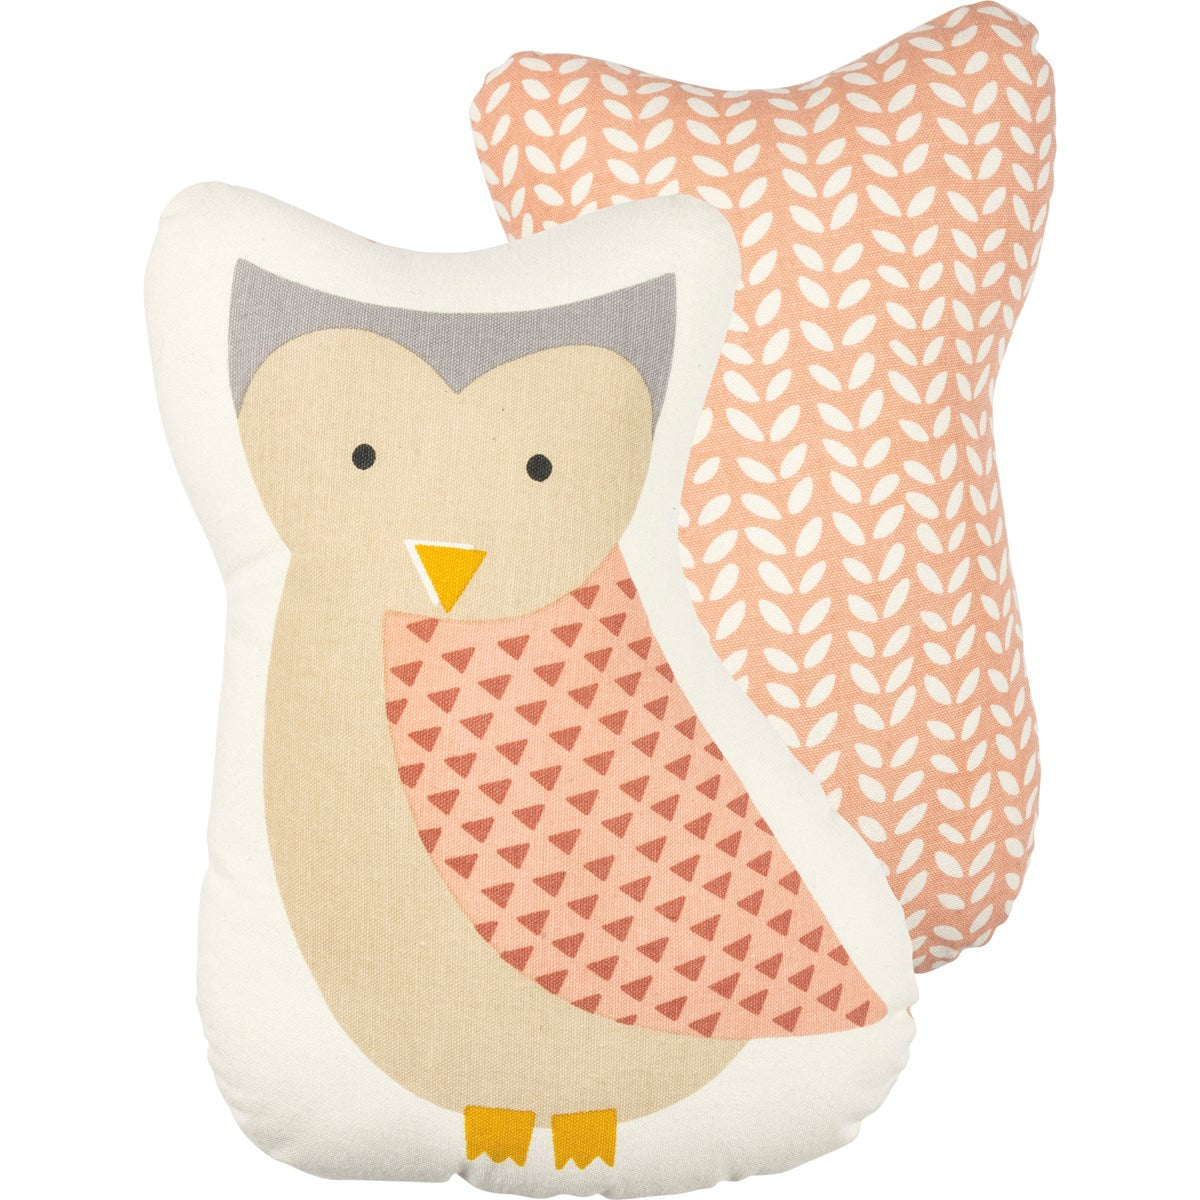 Owl Shaped - Pillow